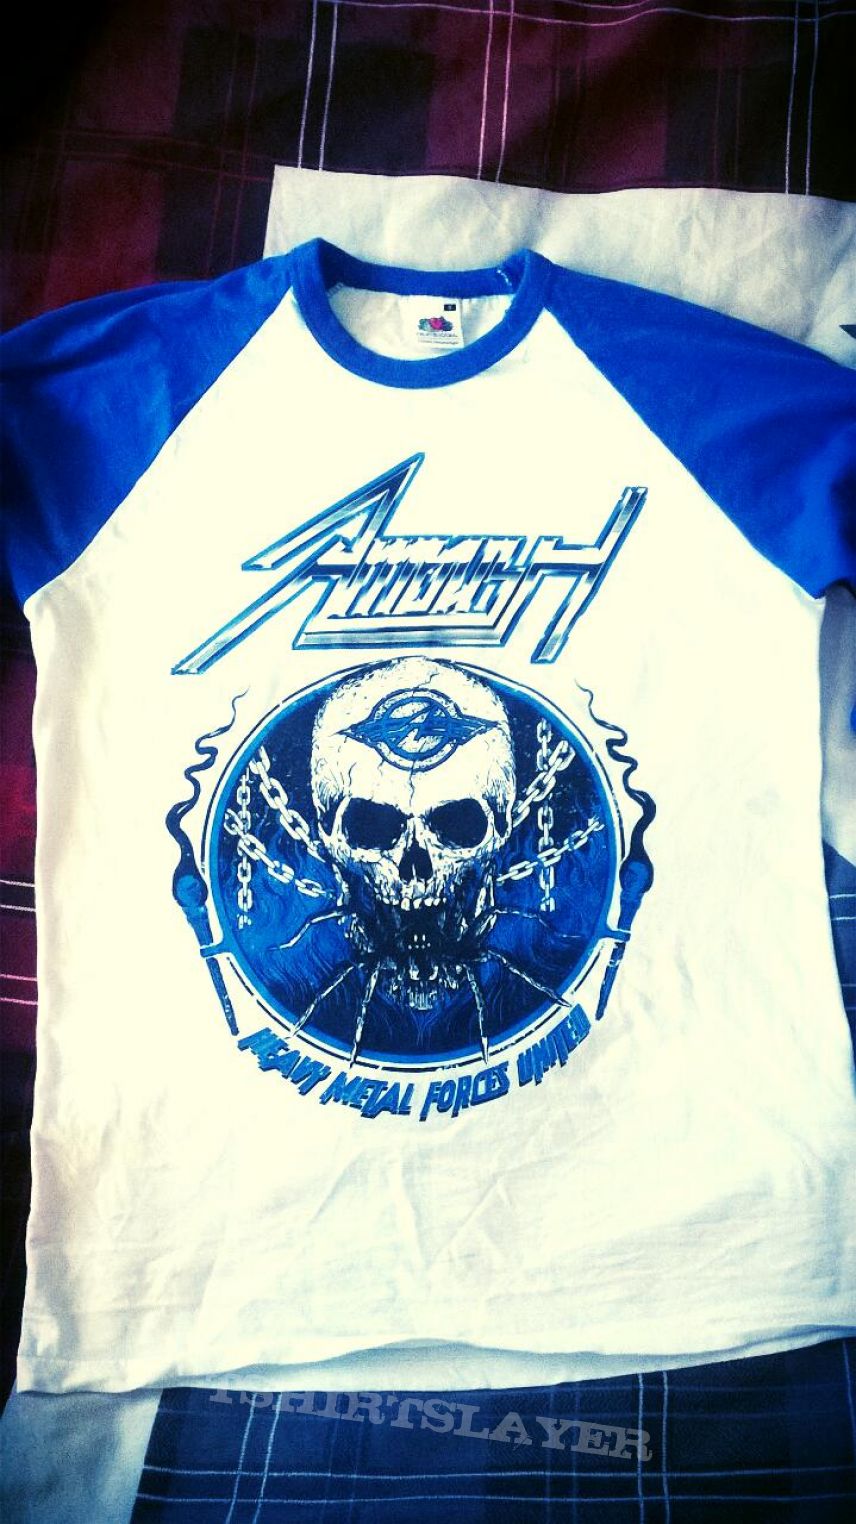 Ambush -Heavy Metal Forces United tour shirt